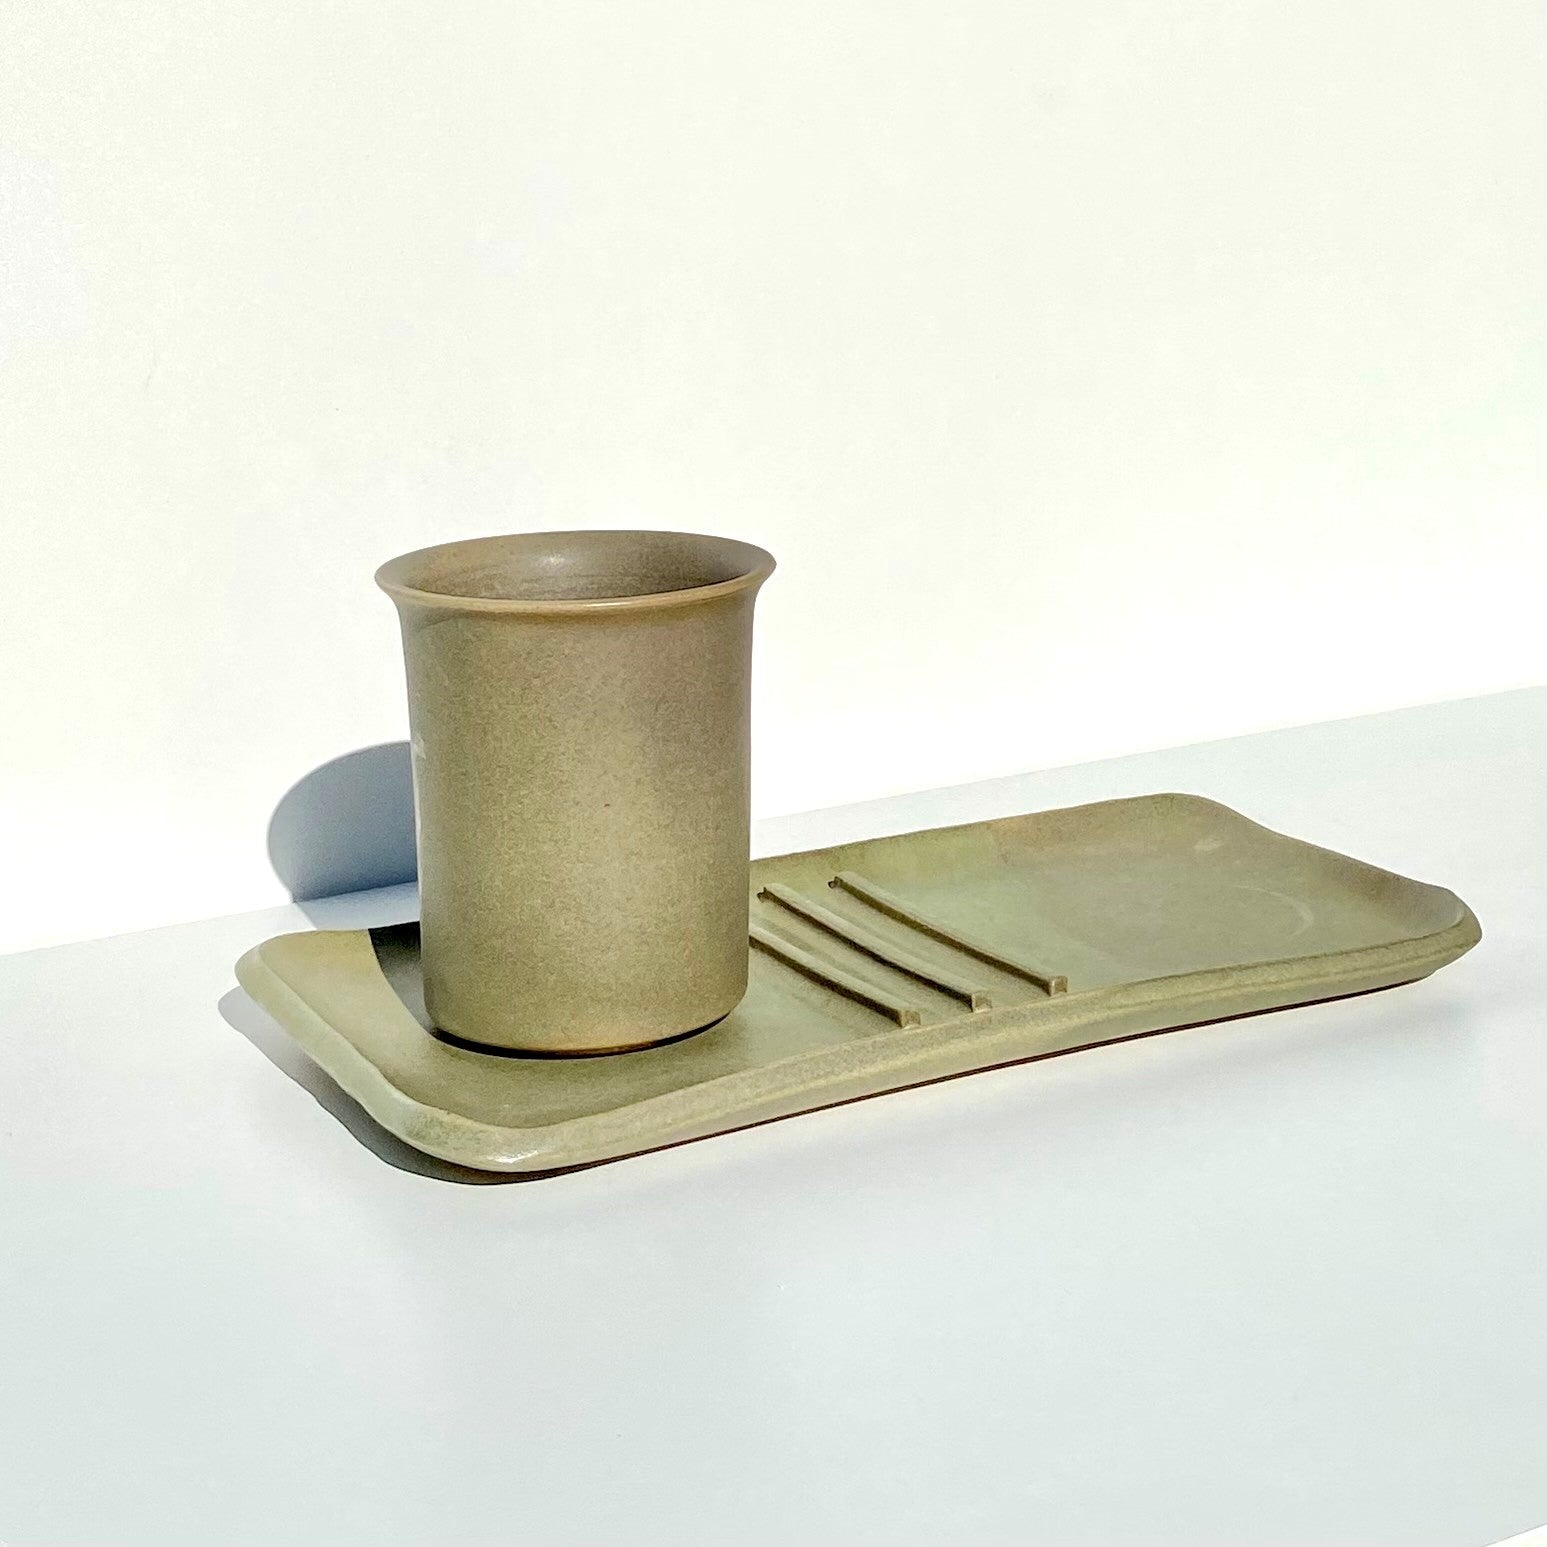 veto_Ceramic Bench Tidy_ceramic storage cup and tray